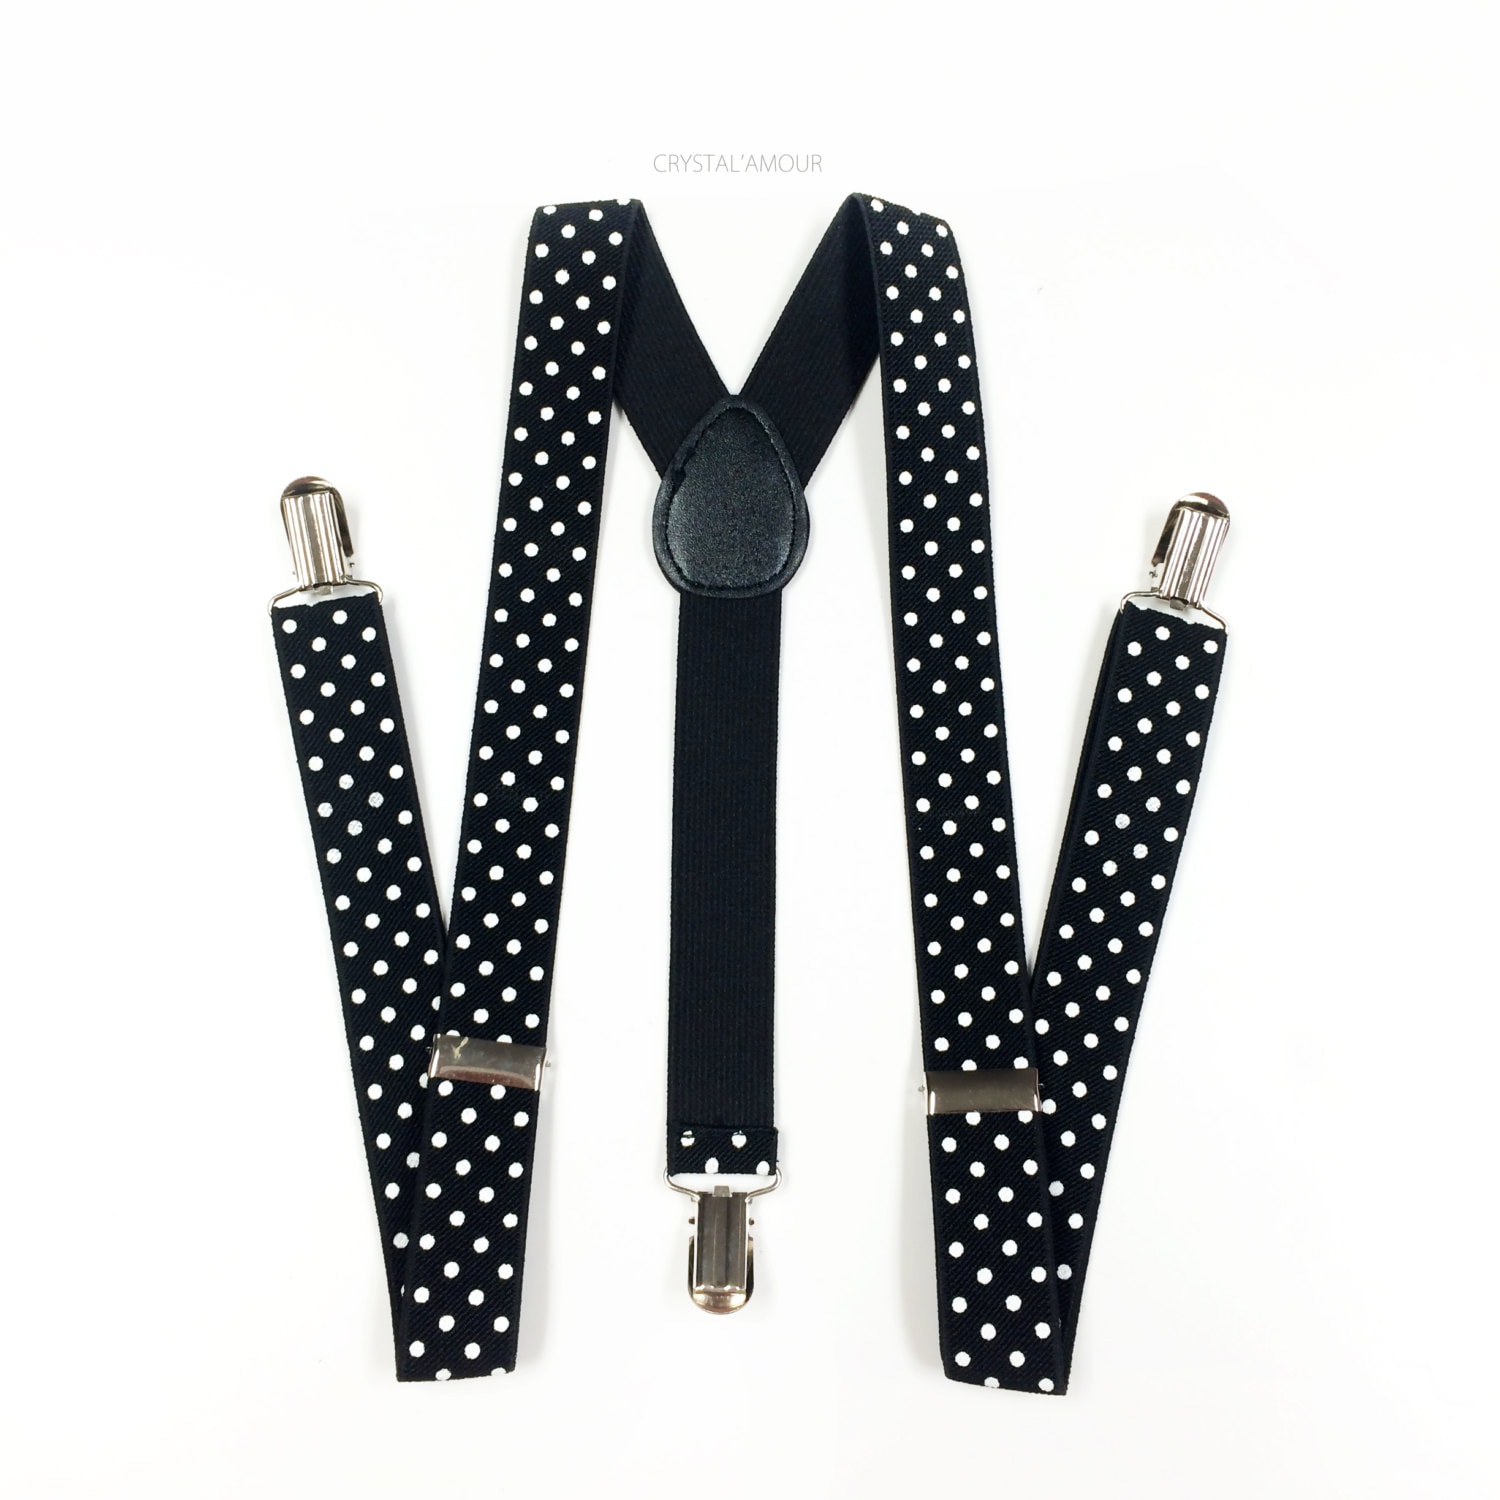 Men's suspenders POLKA DOT black suspenders black | Etsy